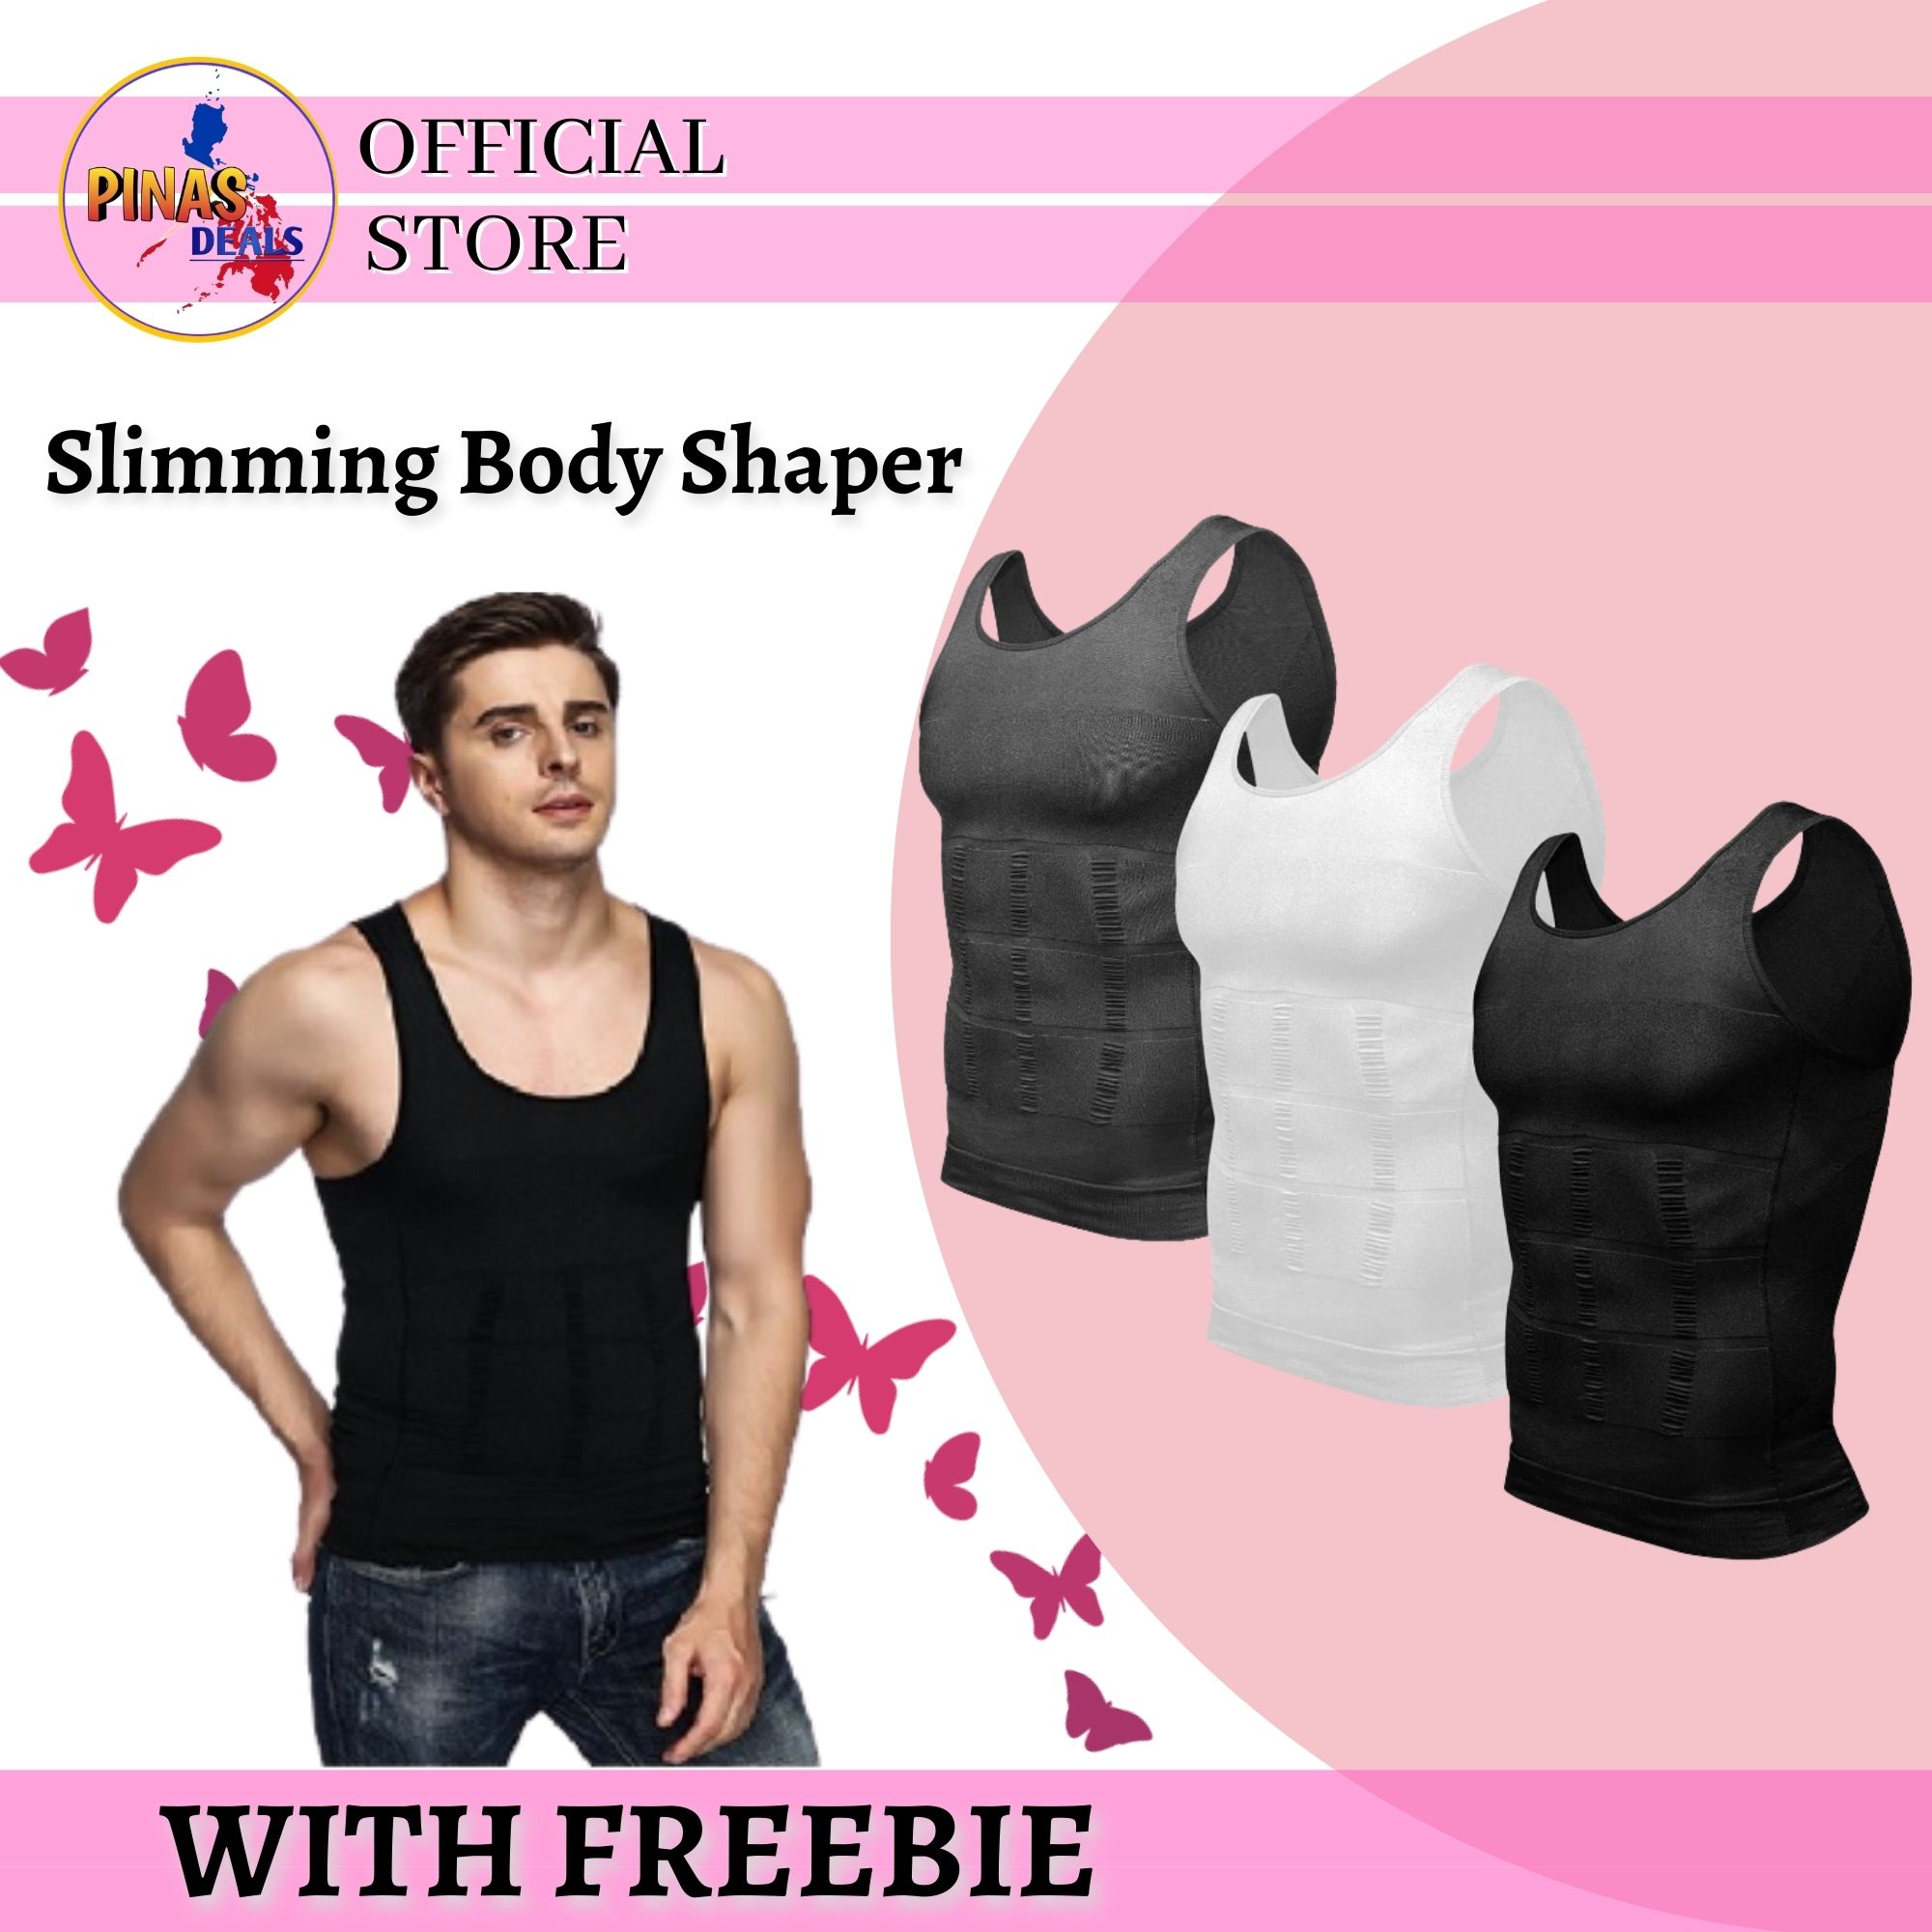 Slim N Lift Slimming Shirt for Men Underwear Body Shaper Waist